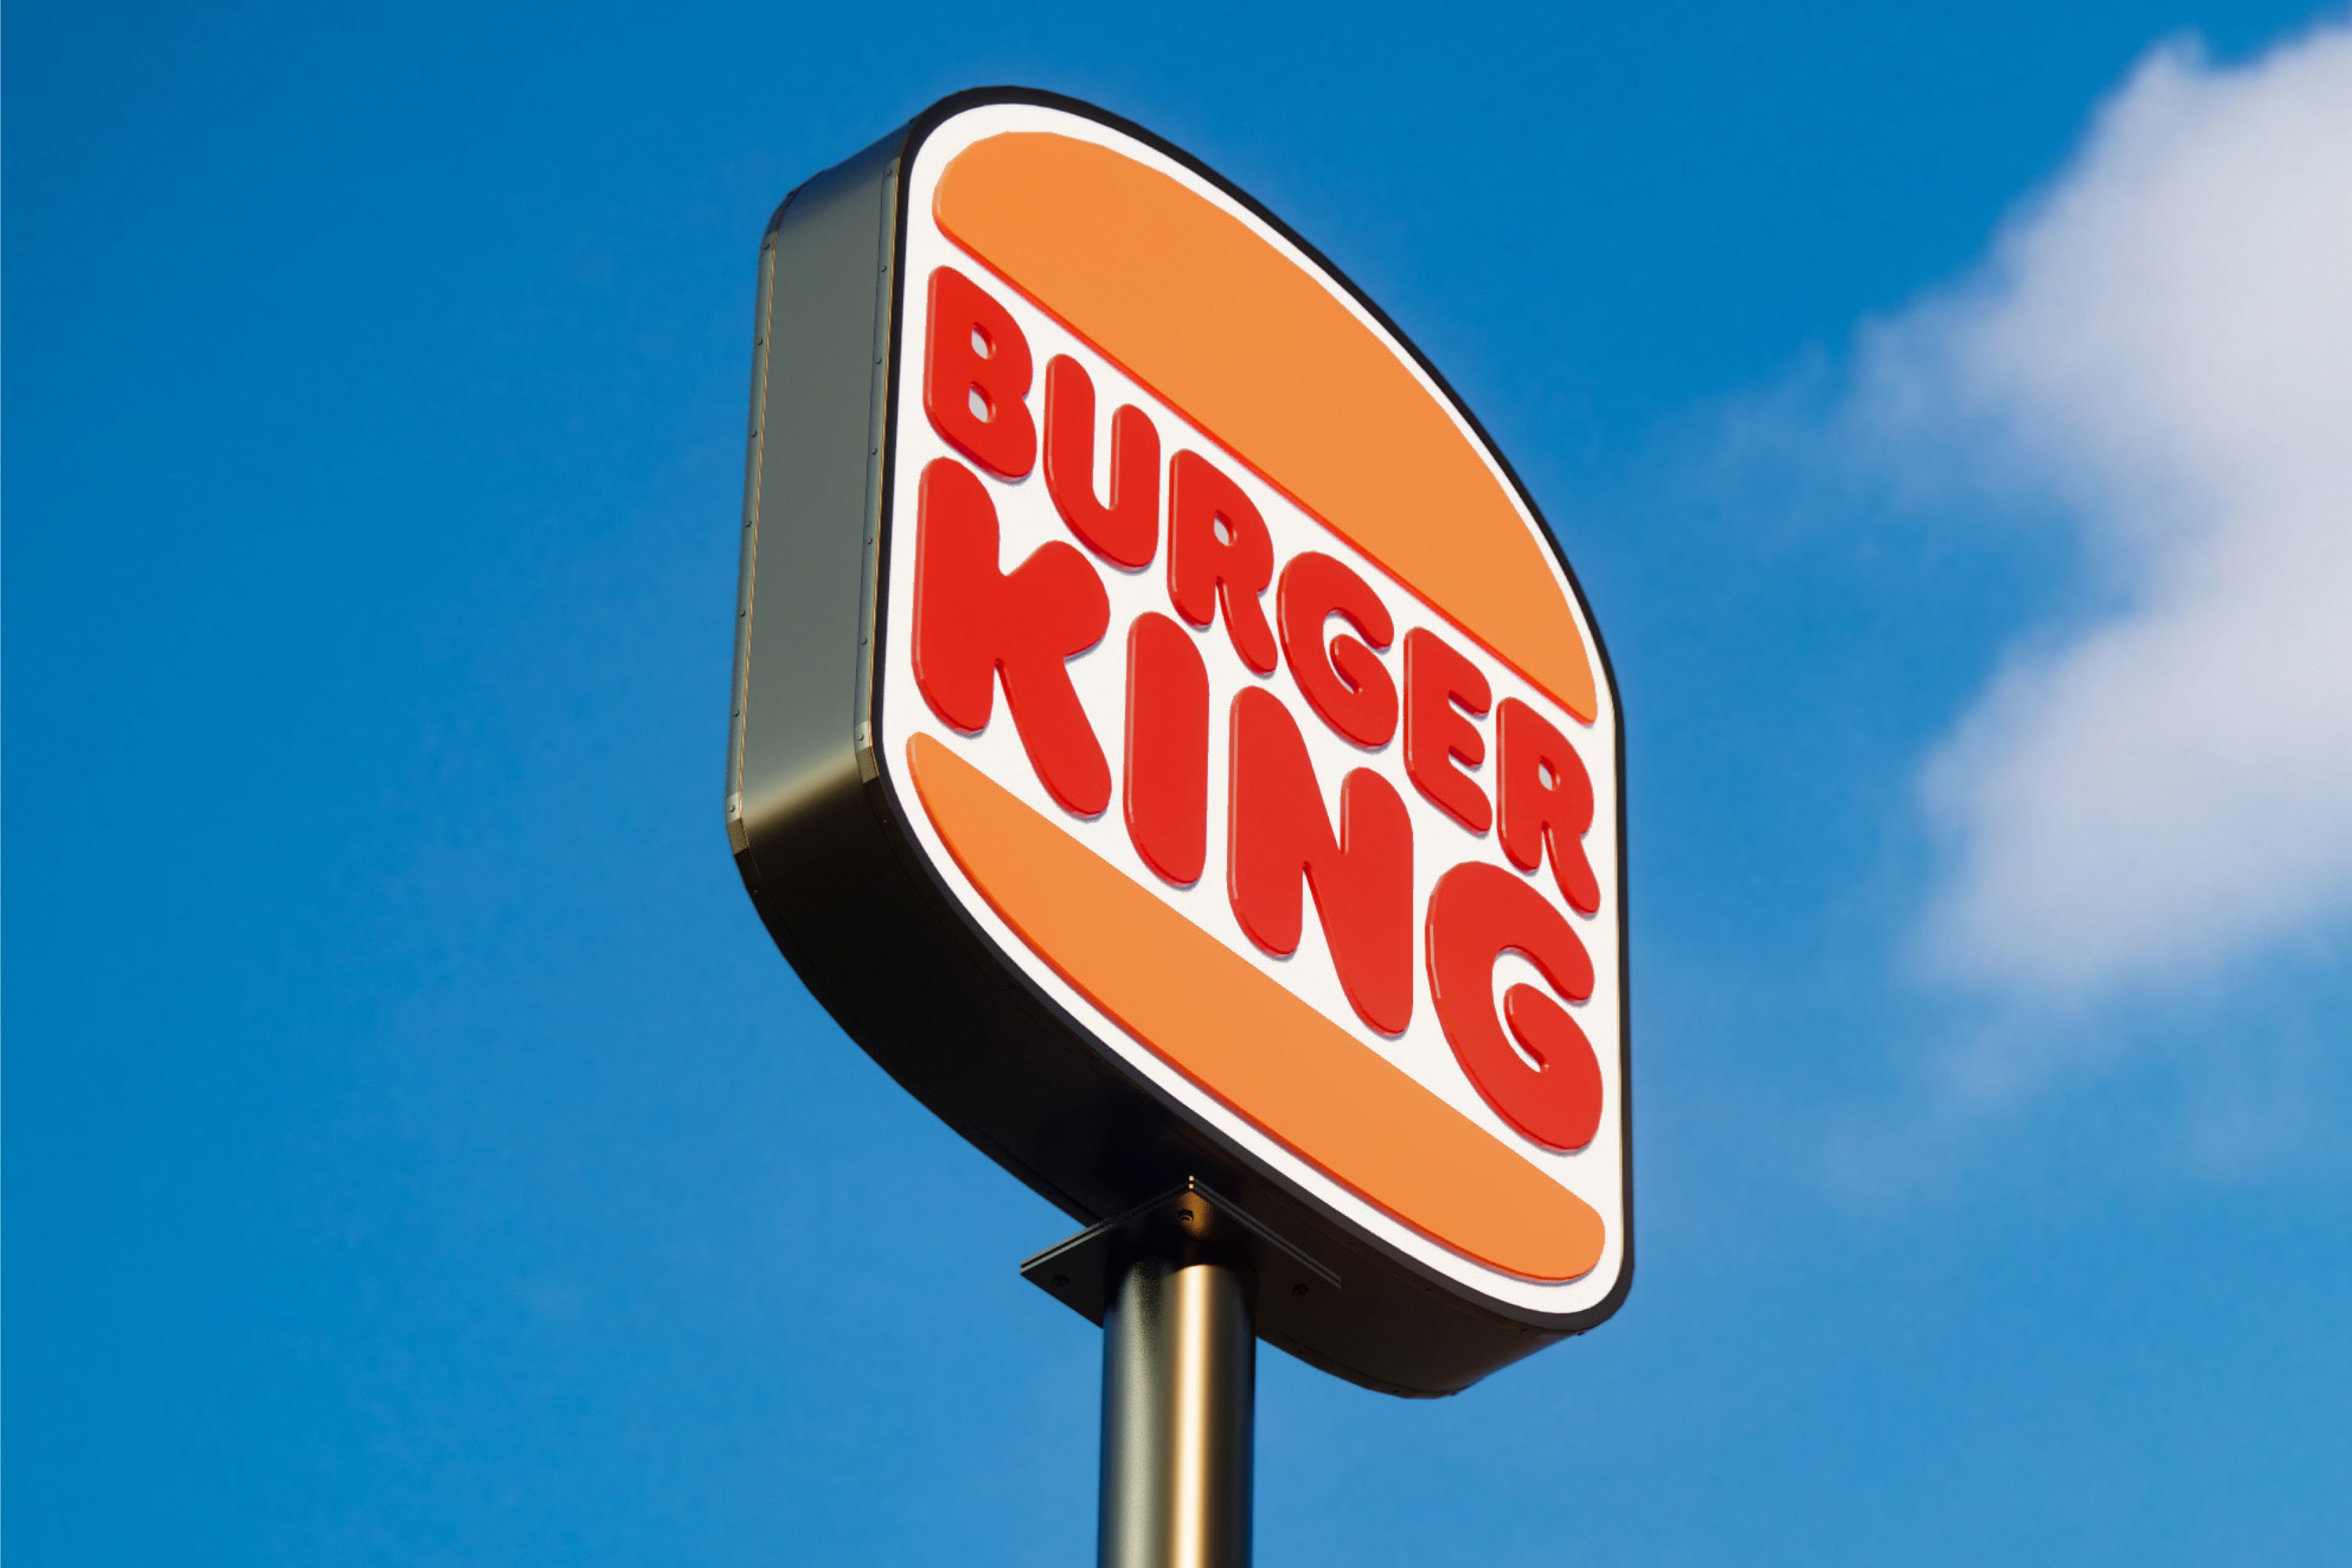 Burger King tests loyalty program as part of digital printing